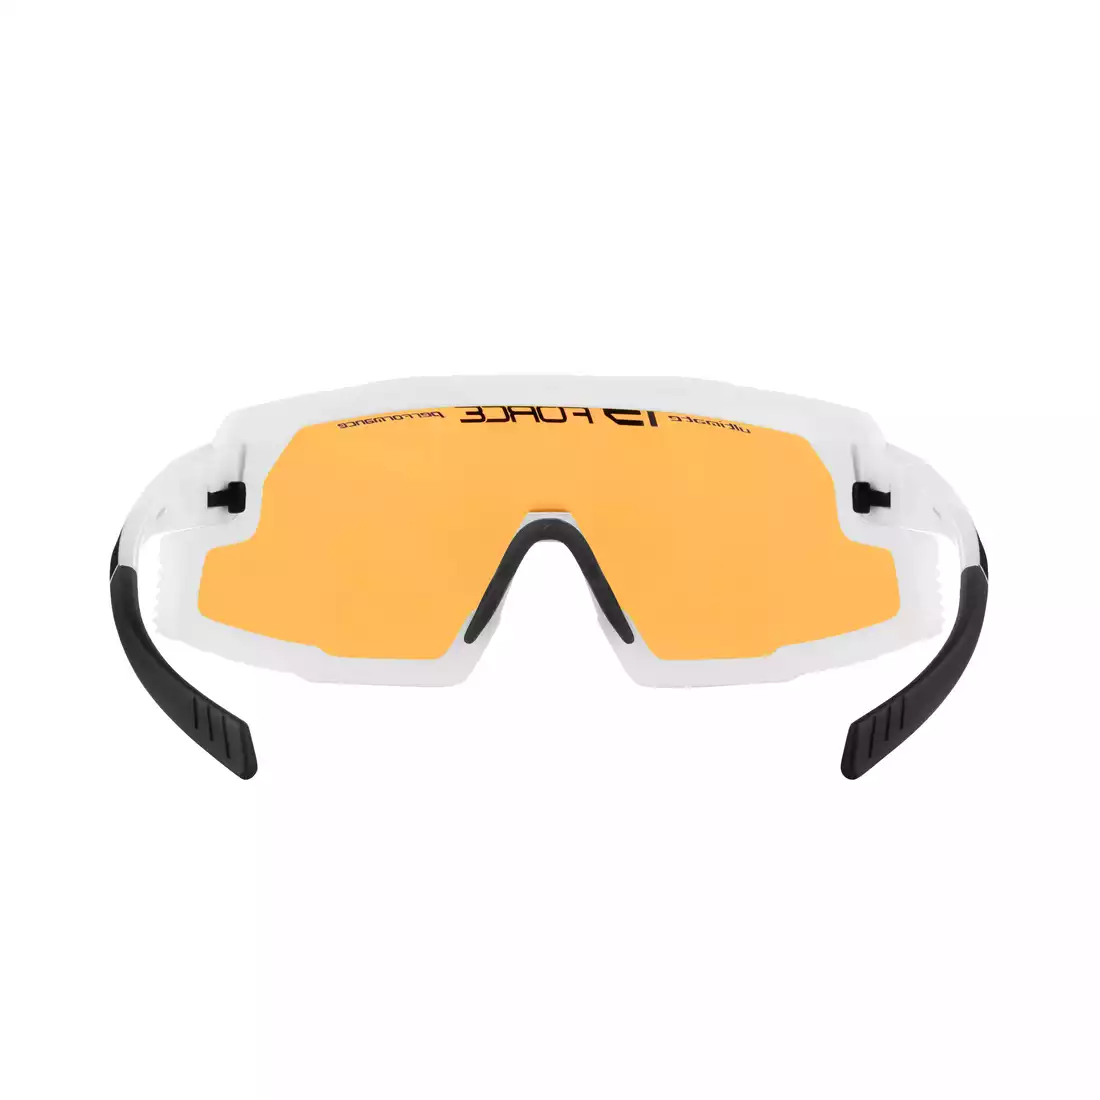 FORCE GRIP Sports glasses, contrast lenses, white